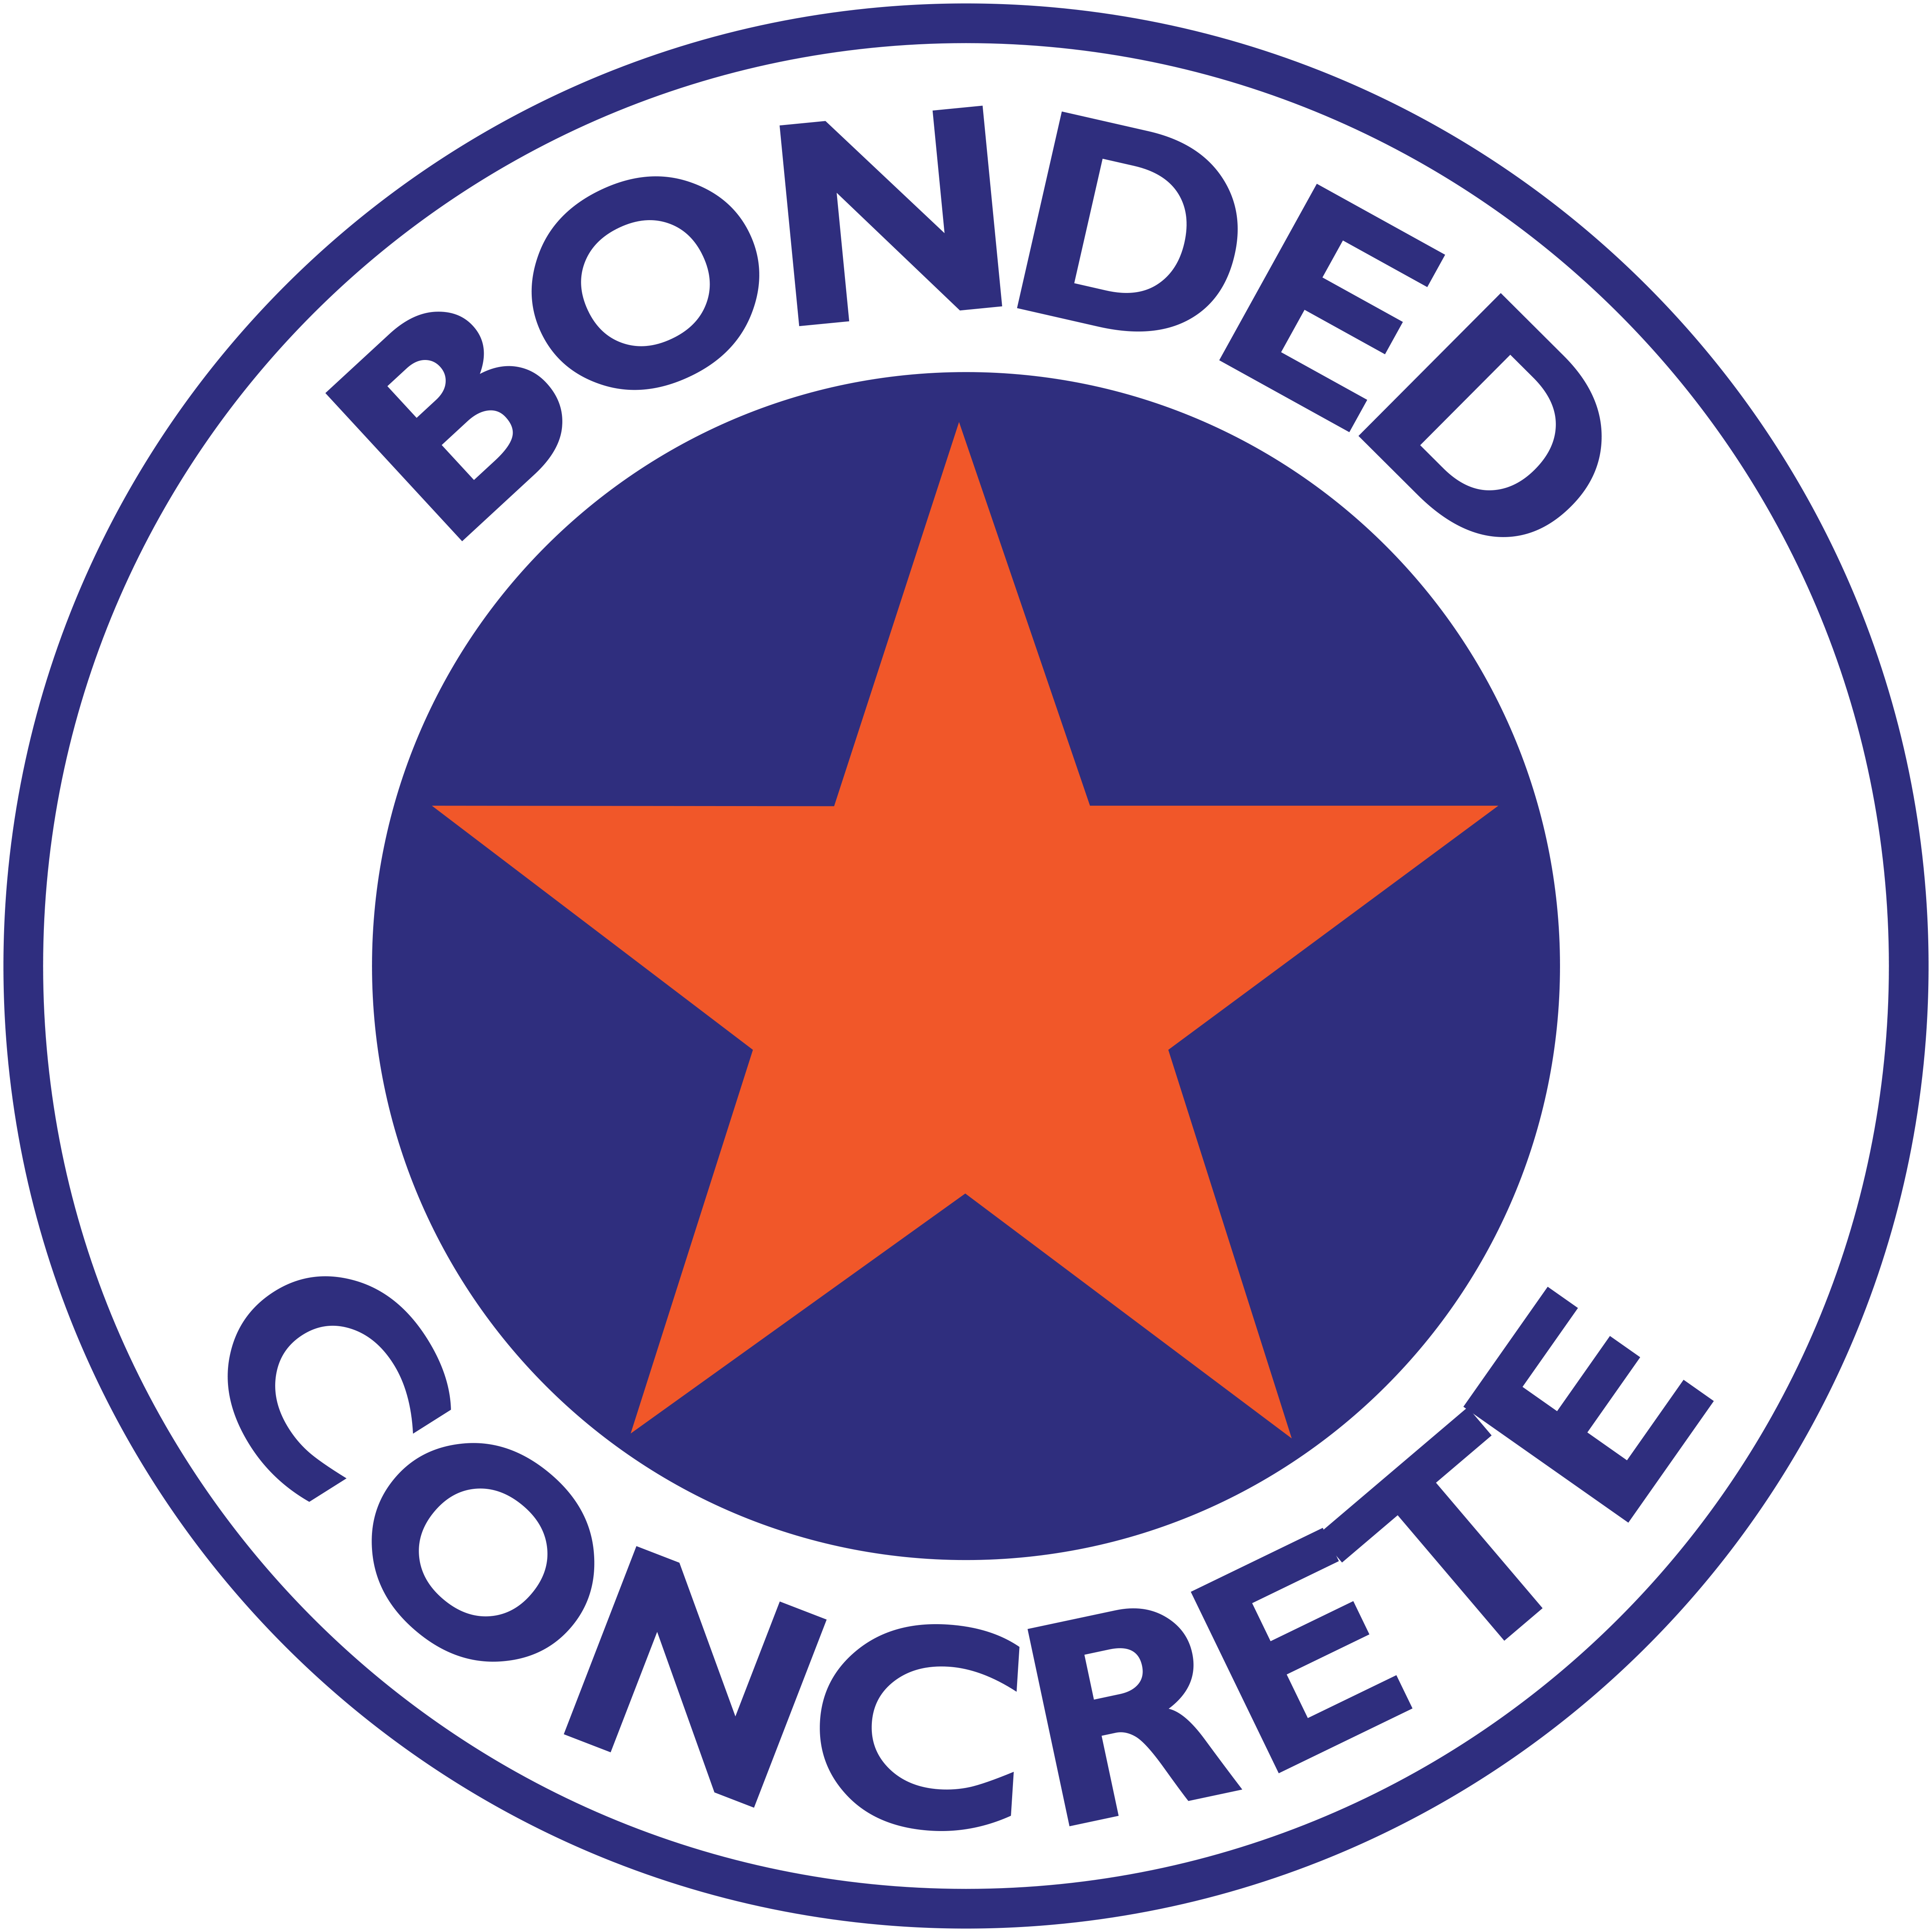 Bonded concrete